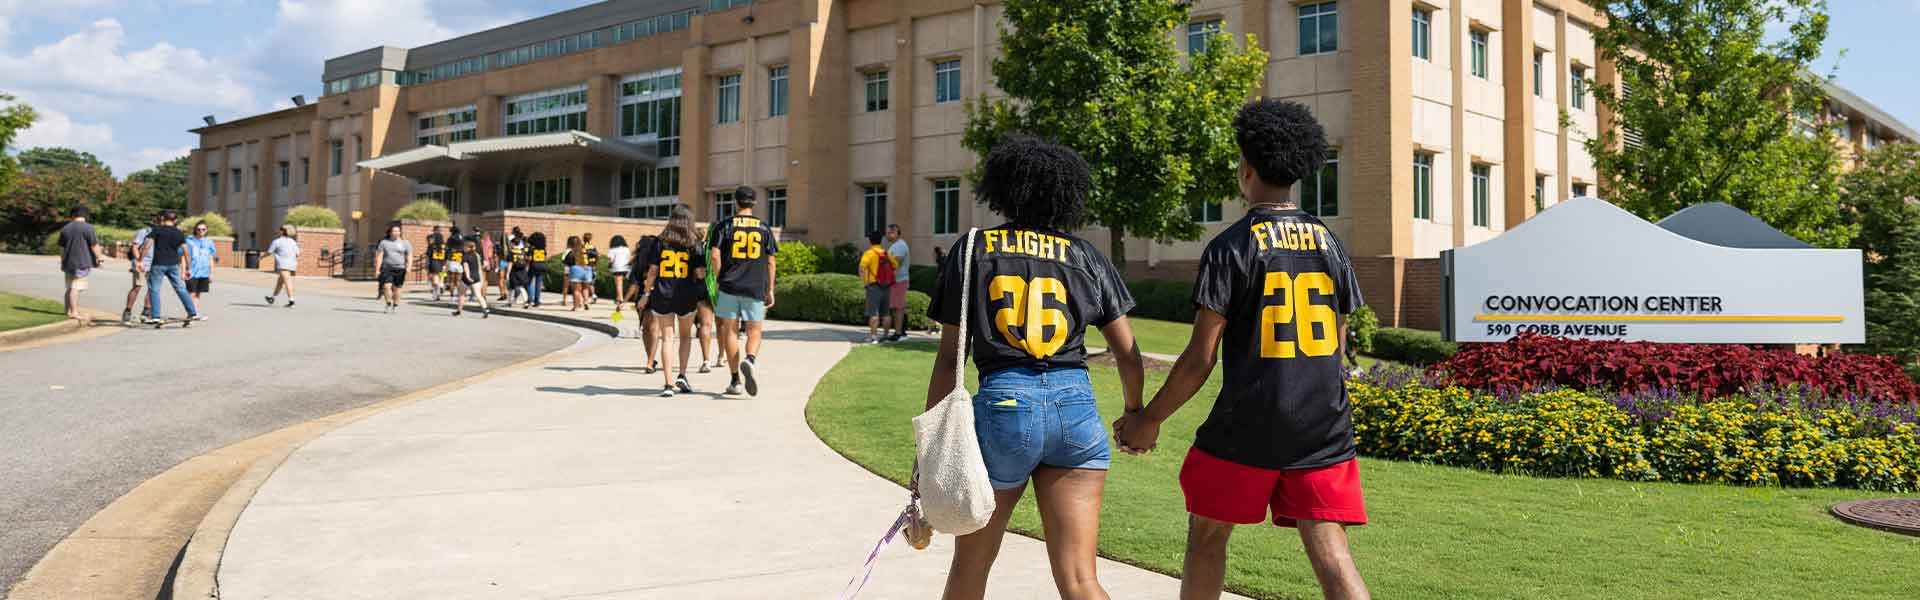 students in FLIGHT26 jerseys walking on campus